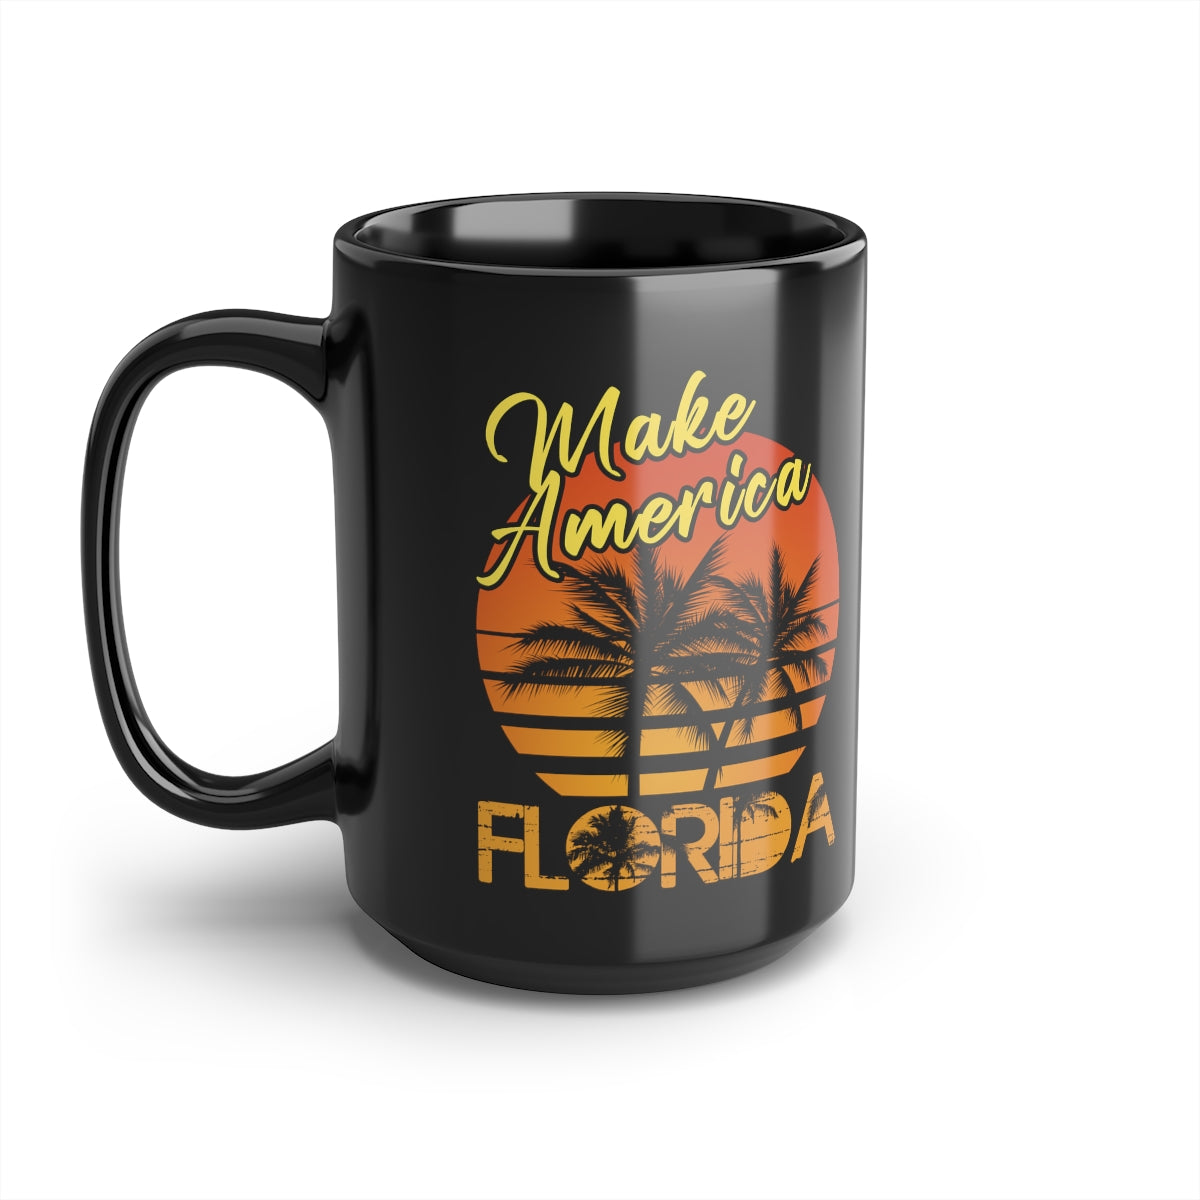 Make America Florida | 15oz Black Mug - Rise of The New Media